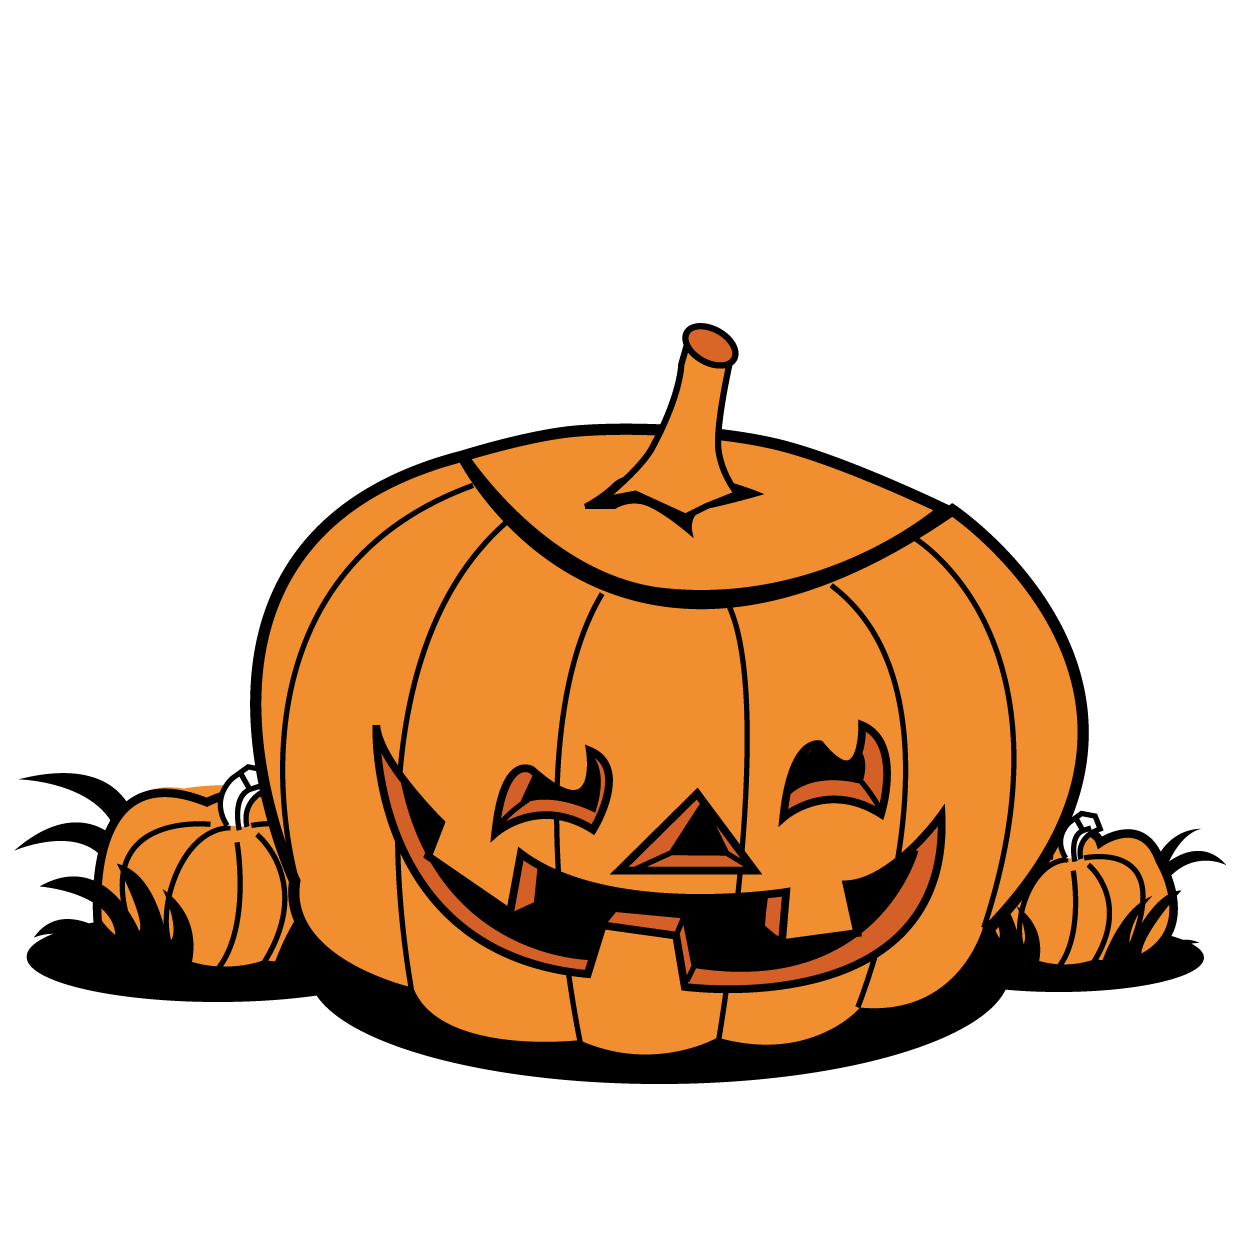 Free halloween pumpkin.